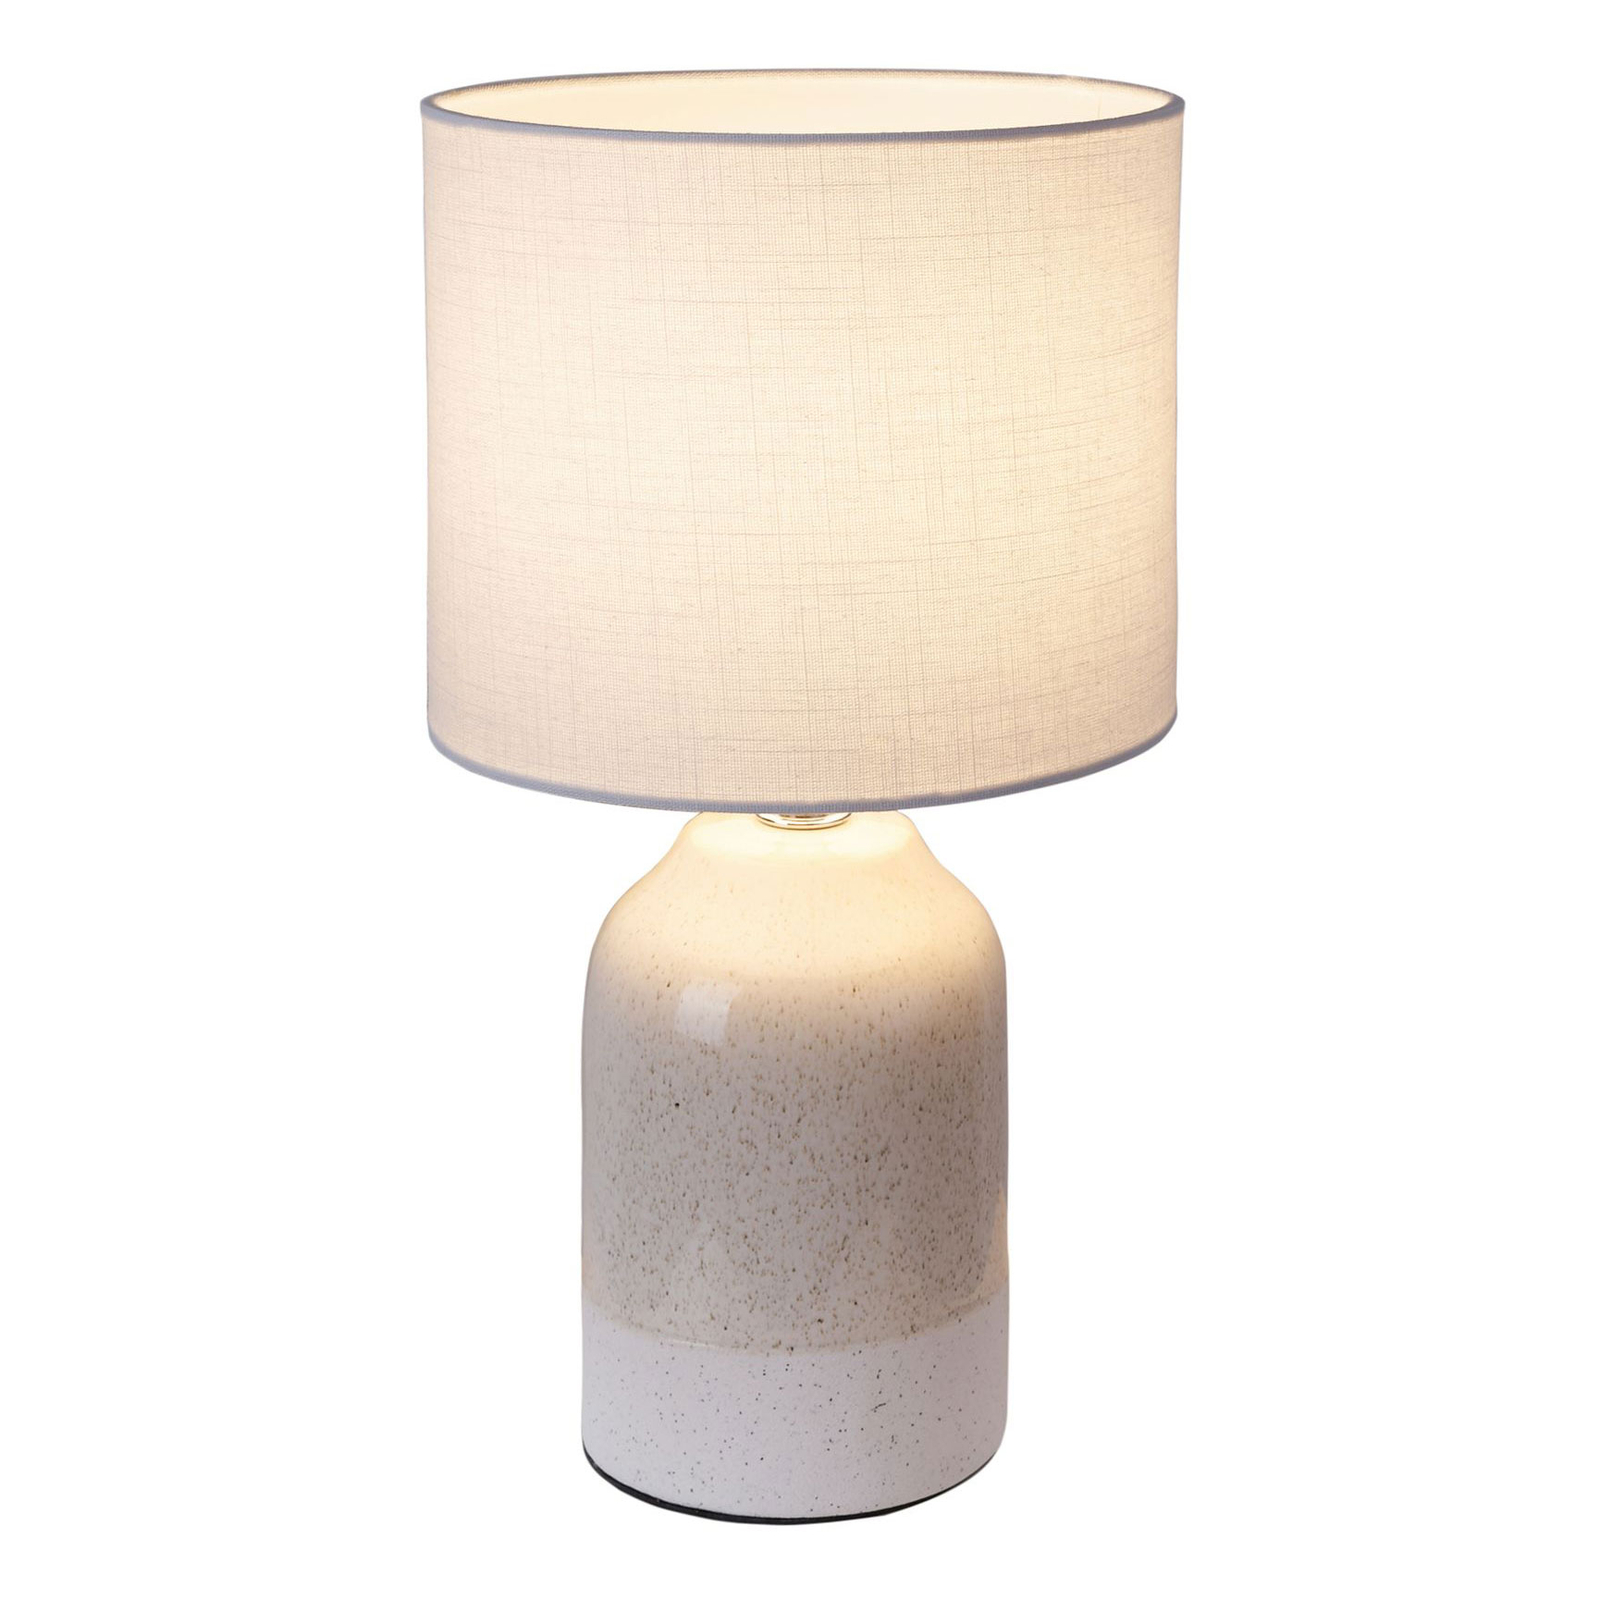 Pauleen Sandy Glow bordlampe, hvid/beige